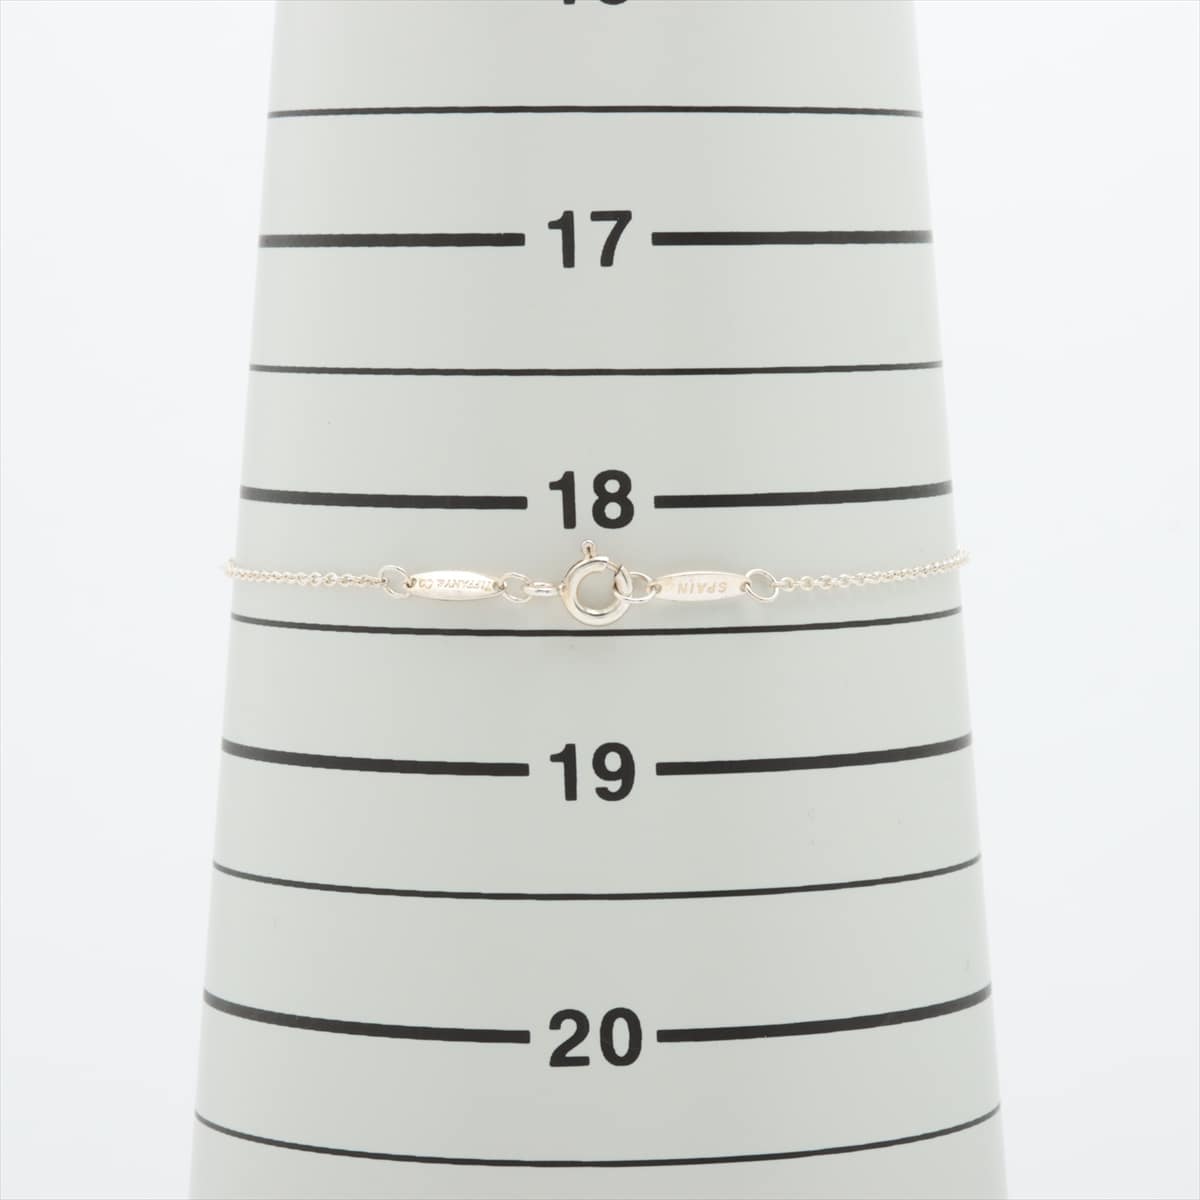 Tiffany By the Yard Bracelet 925 0.9g Silver